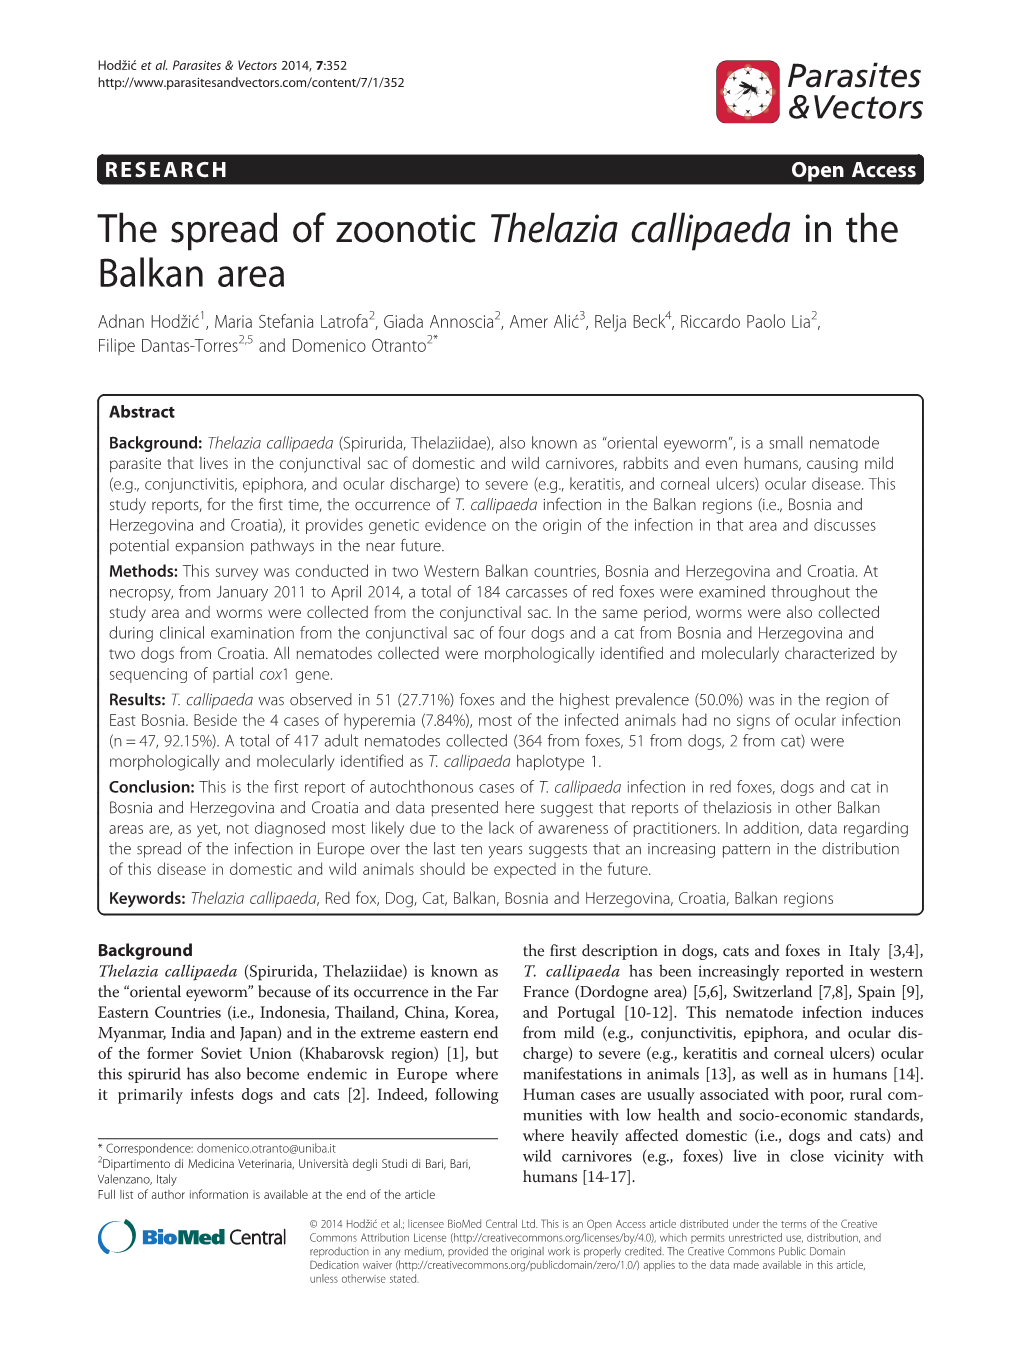 The Spread of Zoonotic Thelazia Callipaeda in the Balkan Area